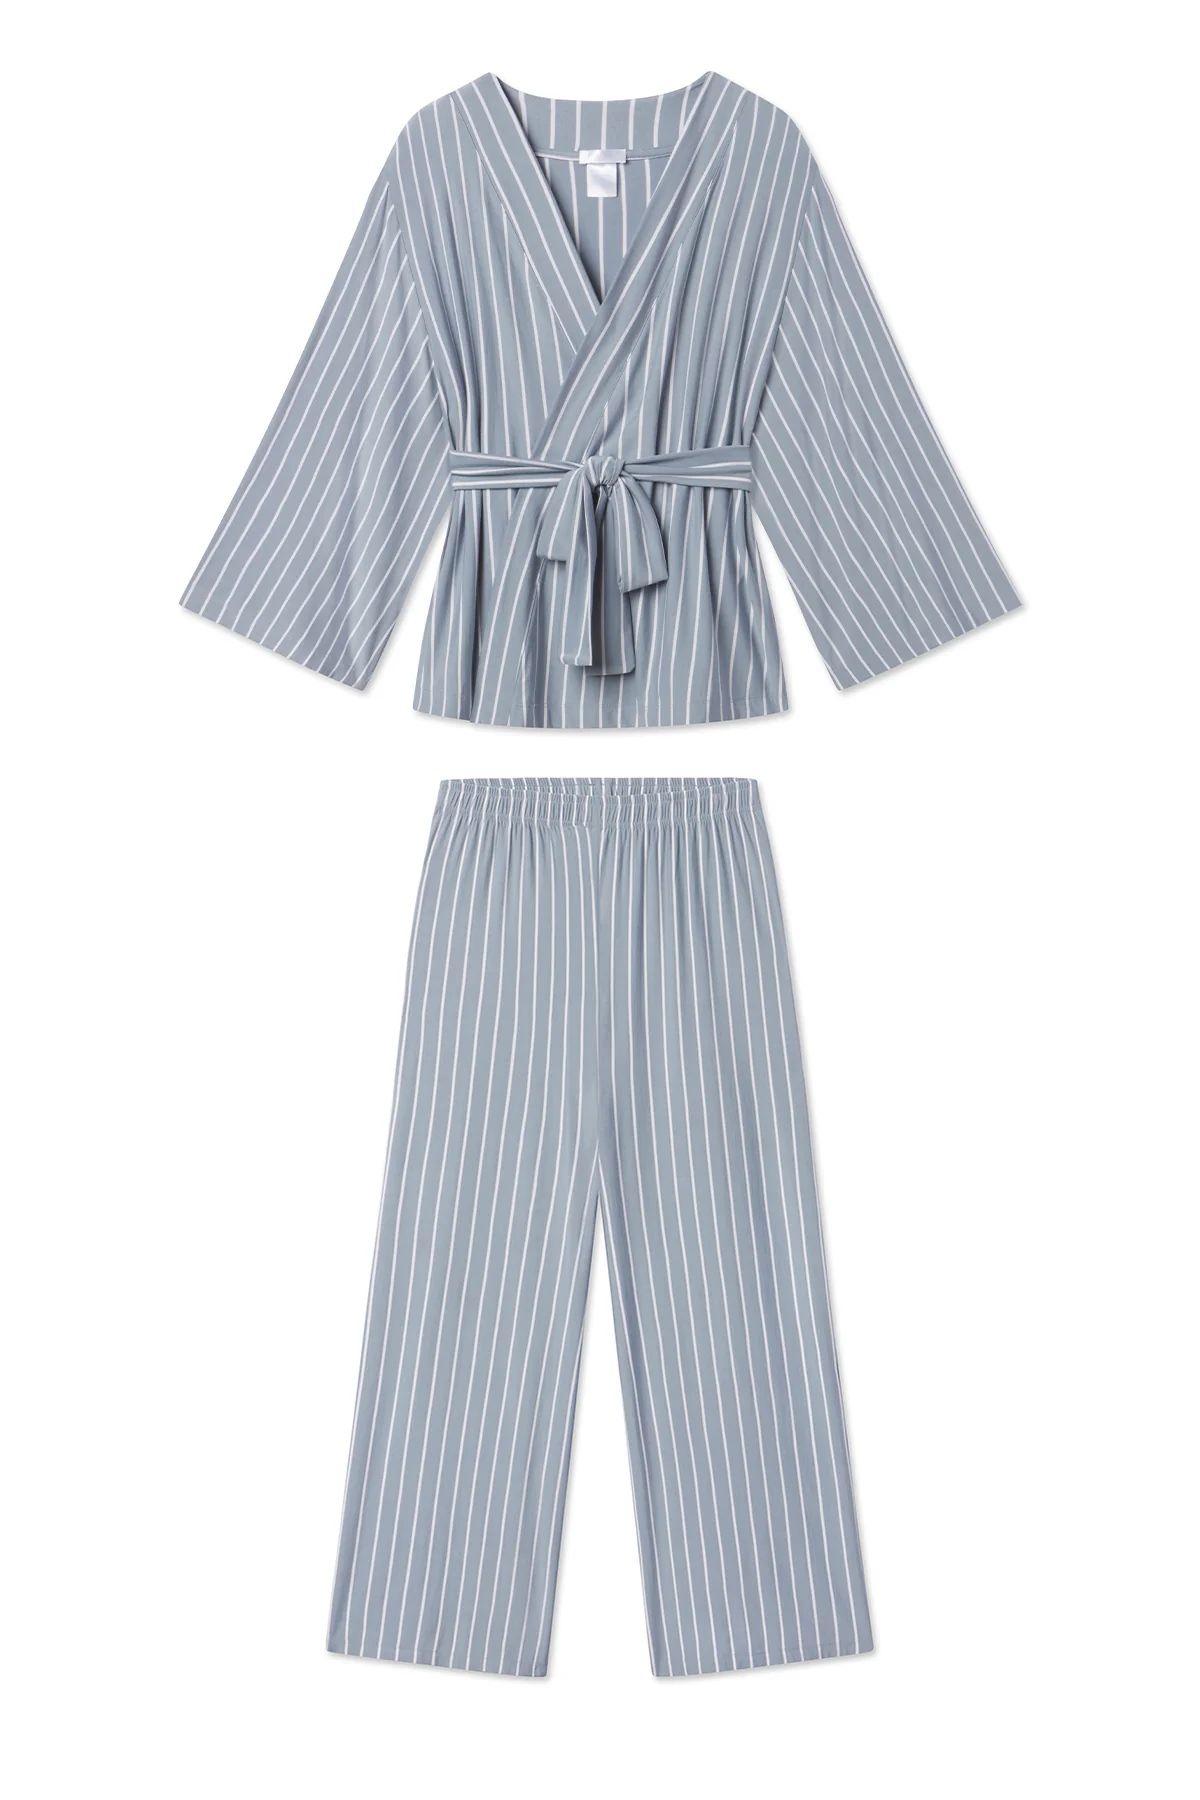 DreamKnit Kimono Pajama Set in Dusty Blue Stripe | Lake Pajamas